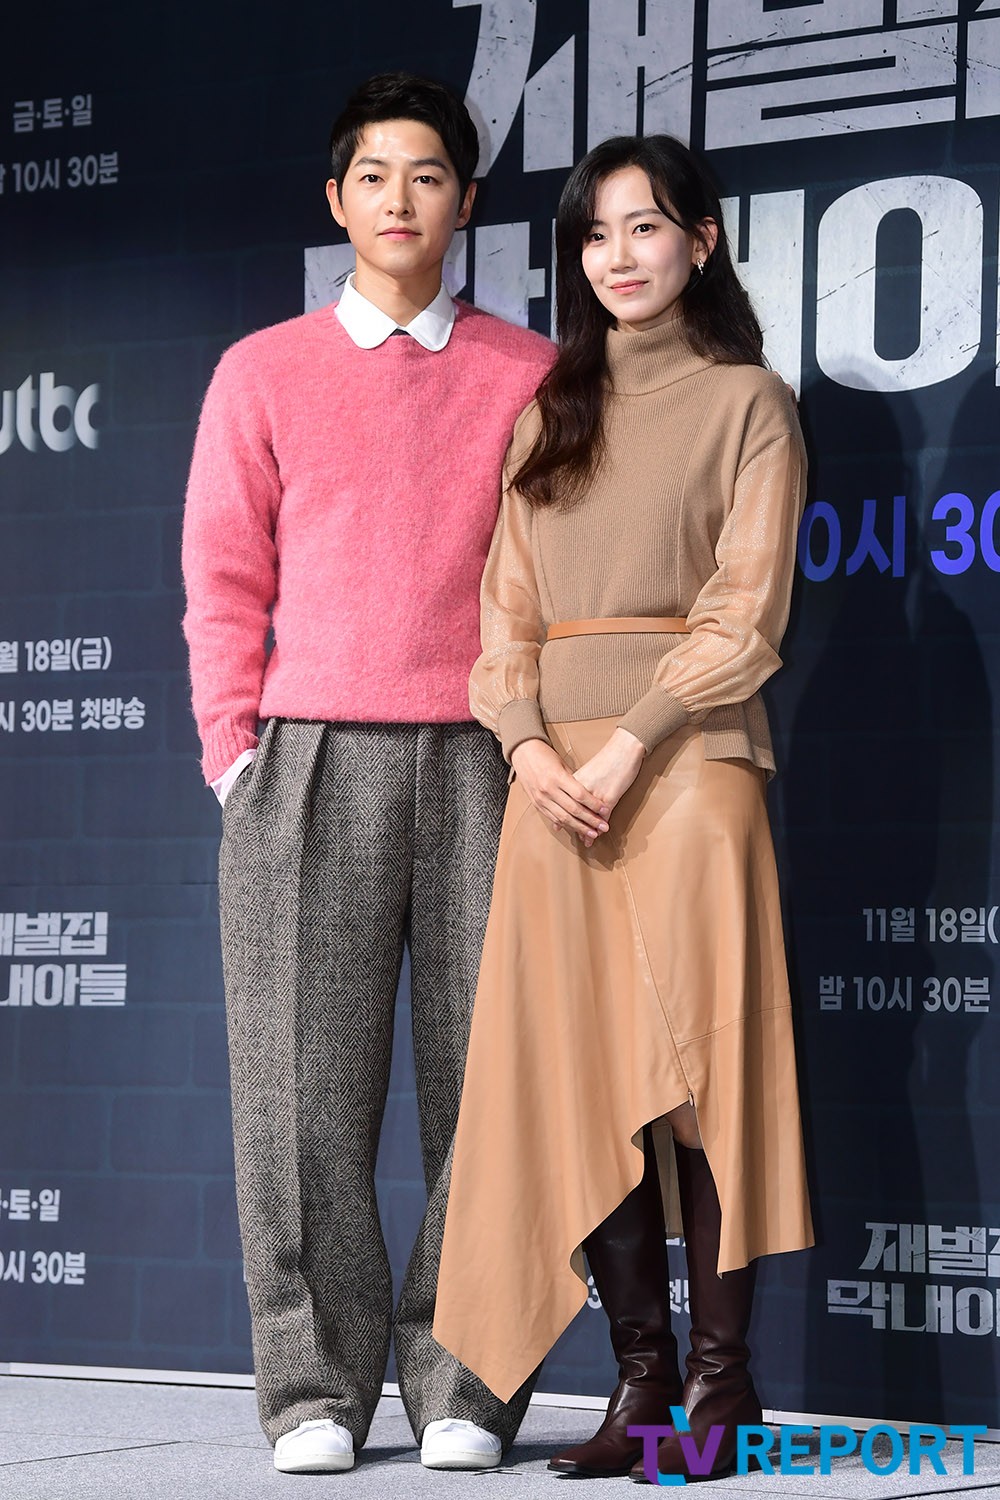 Song Joong-ki and Shin Hyun-been confirmed for 'Reborn Rich